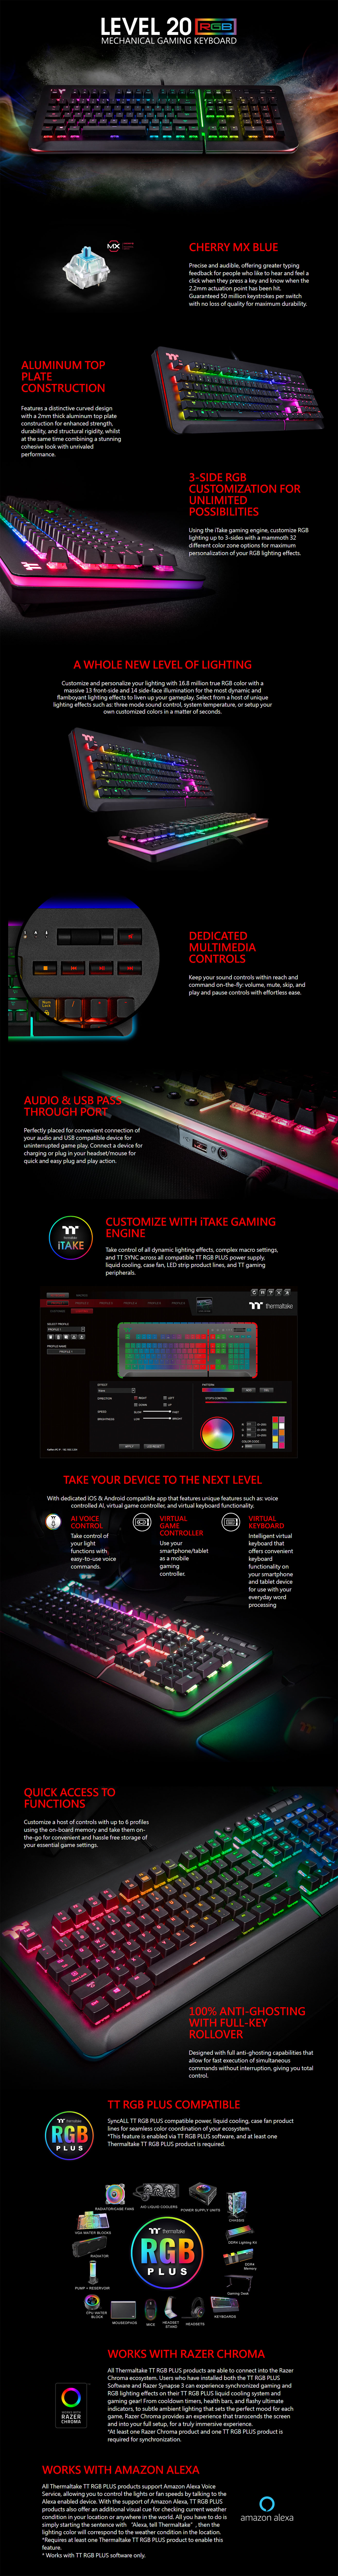 Keyboards-Thermaltake-Level-20-RGB-Mechanical-Gaming-Keyboard-Cherry-MX-Blue-1